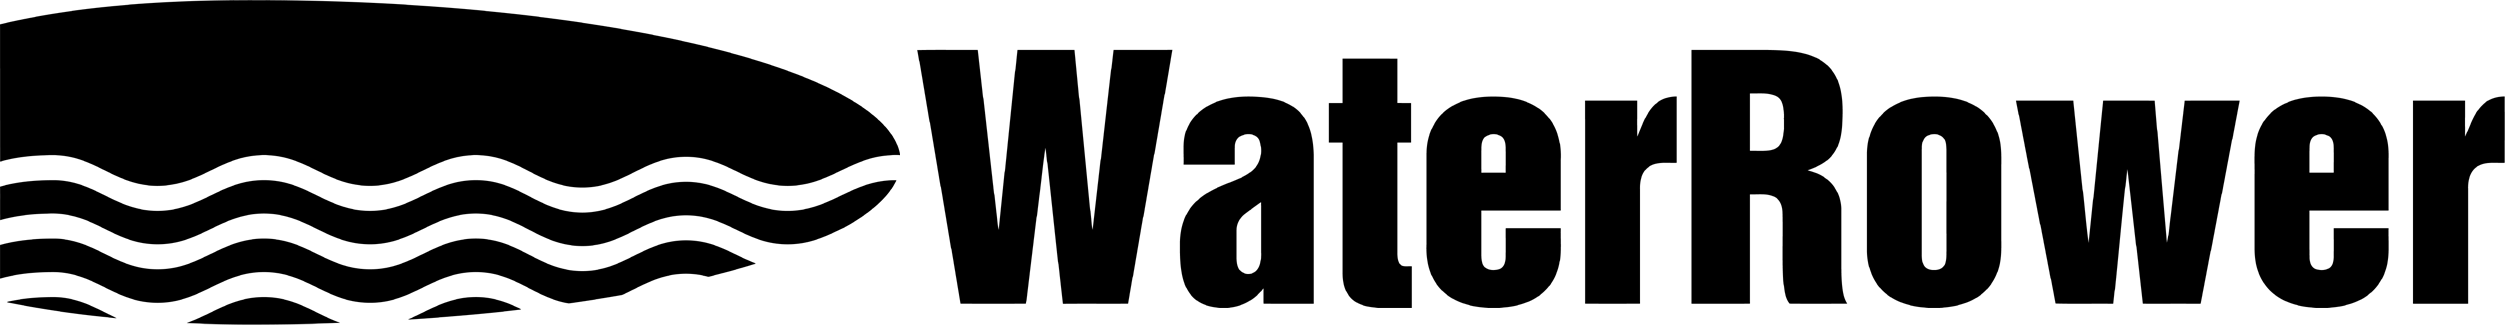 WaterRower-Logo-Description-Black(2).png